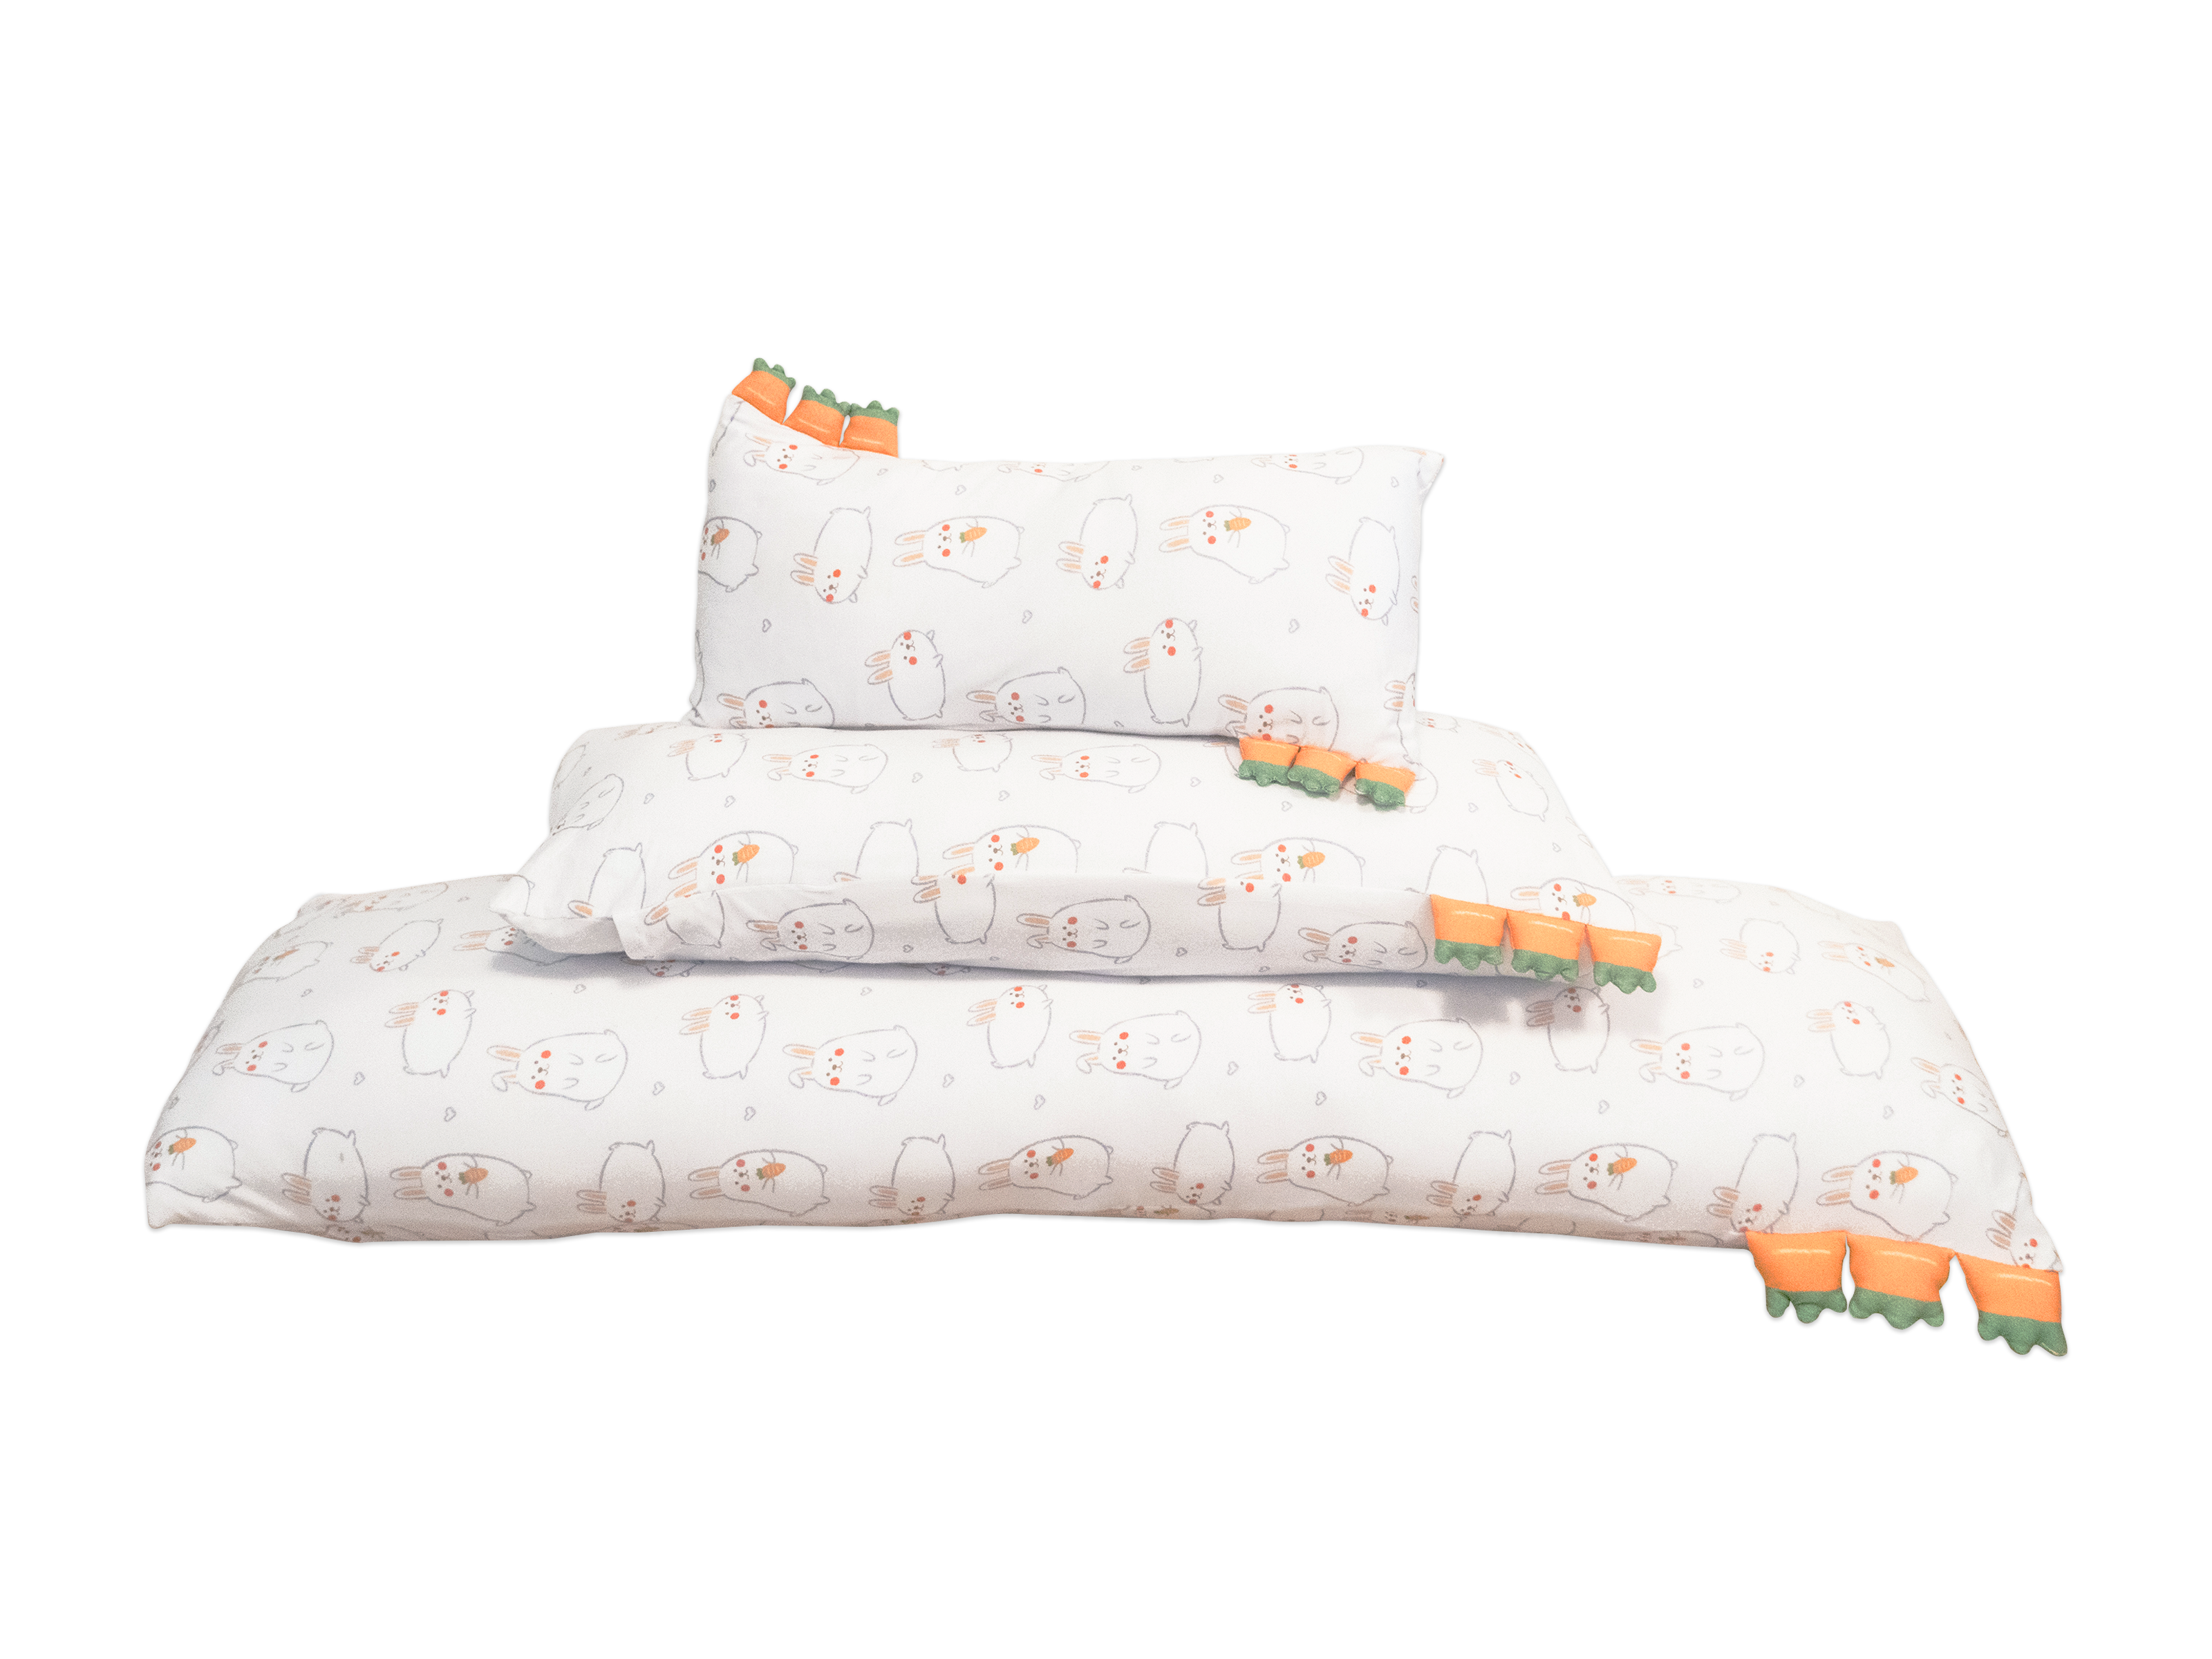 Cho Snuggy Buddy Pillow (Momo Bunny: Large 23 x 53cm)